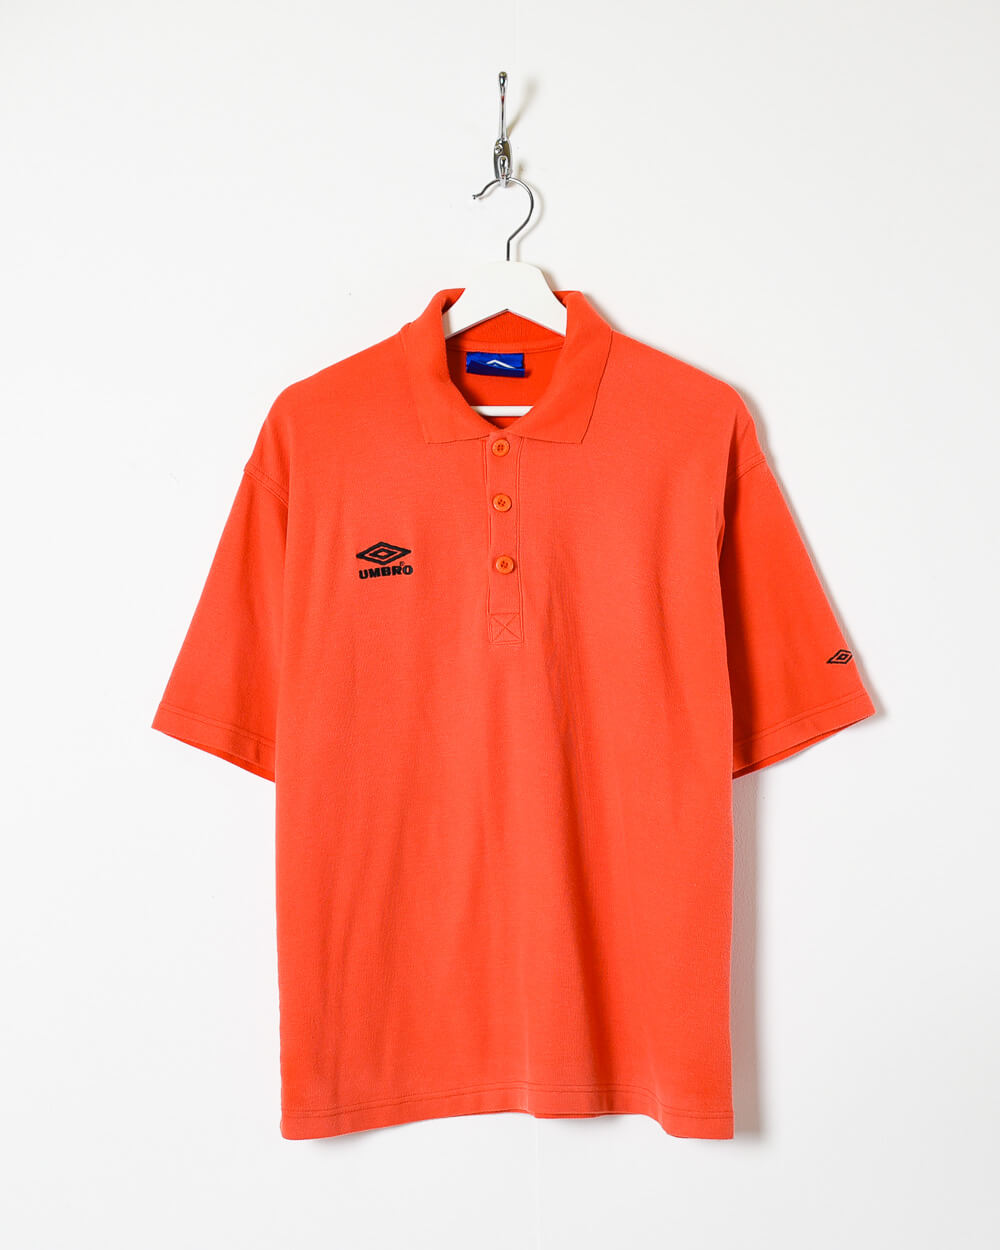 Orange Umbro Polo Shirt - Medium